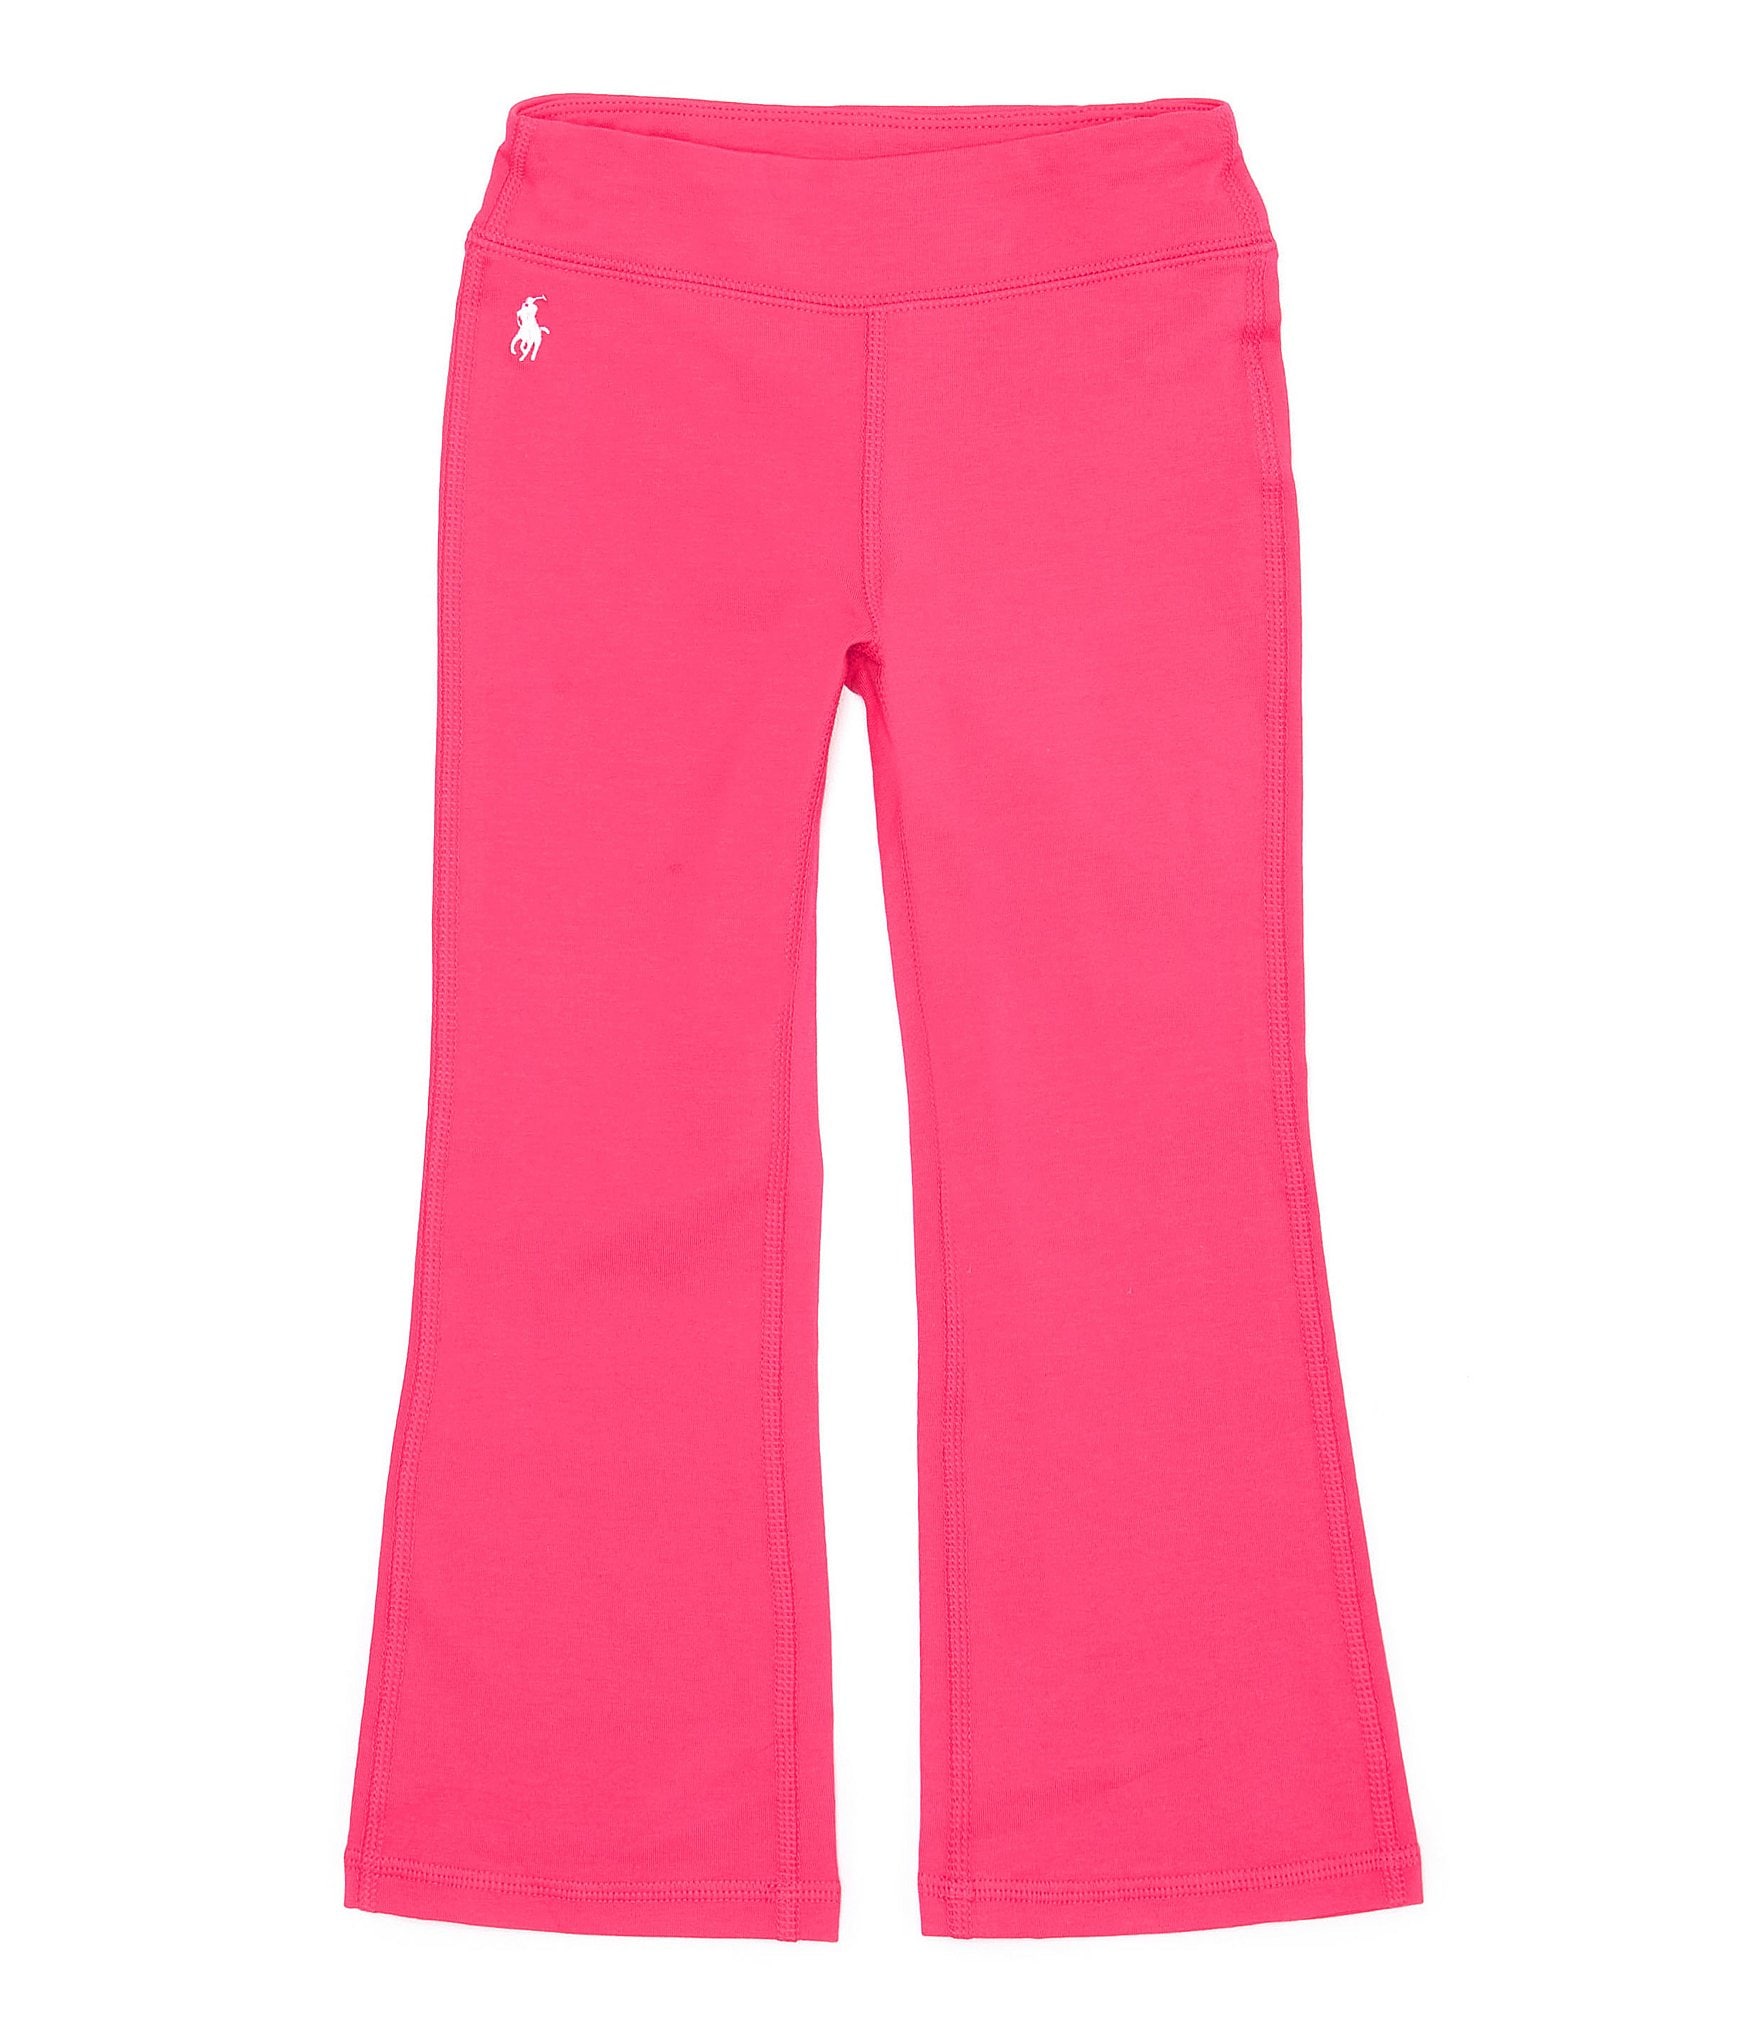 Polo Ralph Lauren Girls 4T Navy Sweatpants Skinny Leg, Pink Small Horse